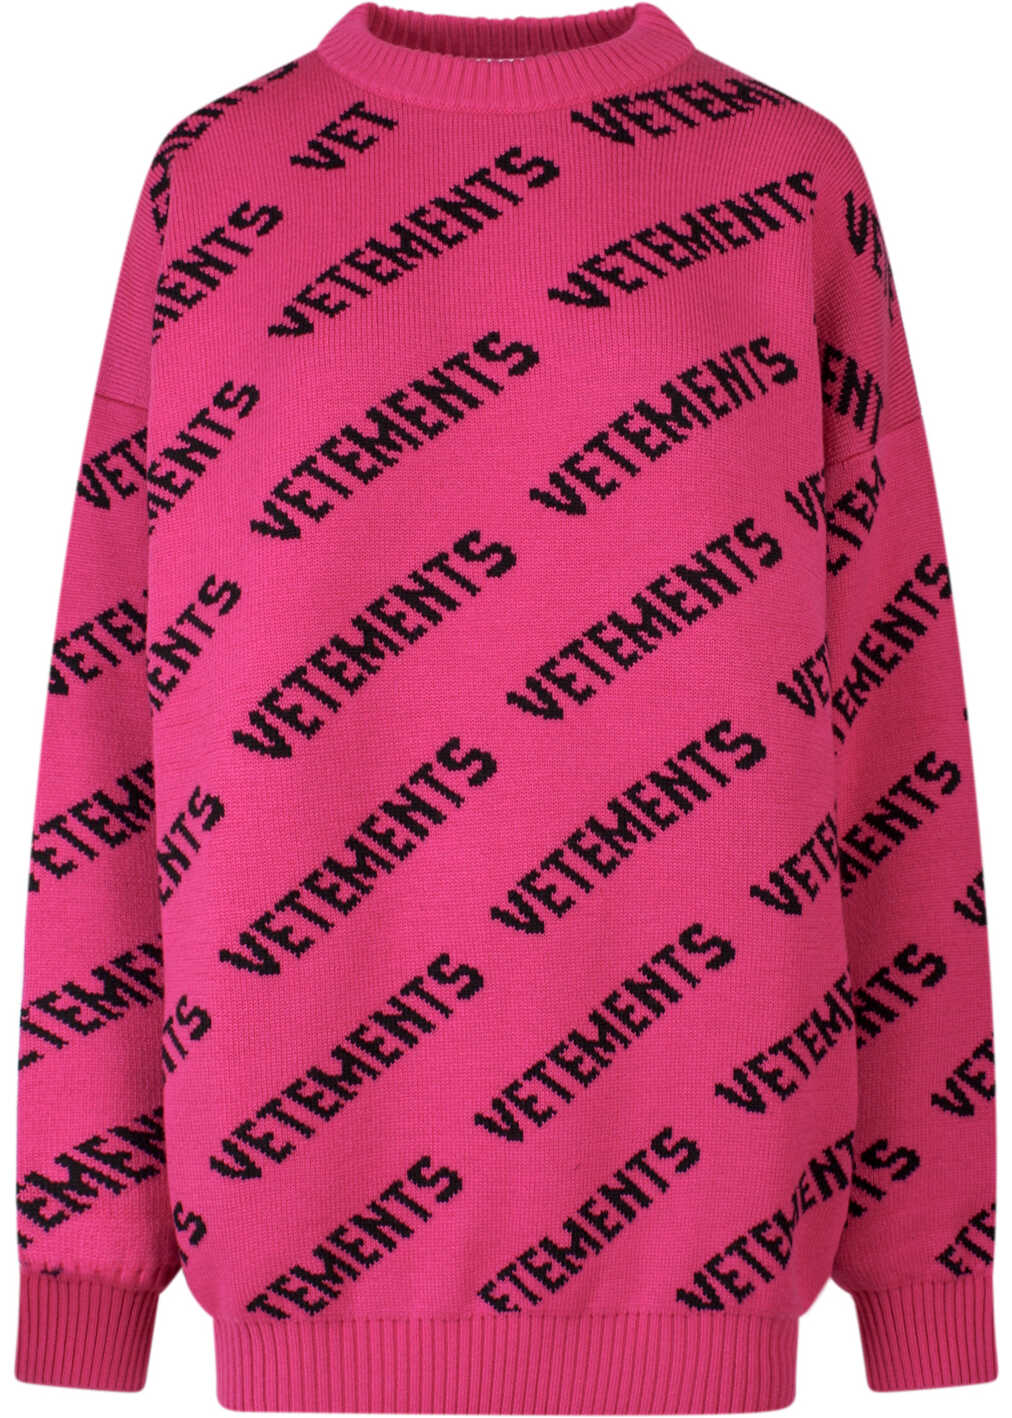 Vetements Sweater Pink image